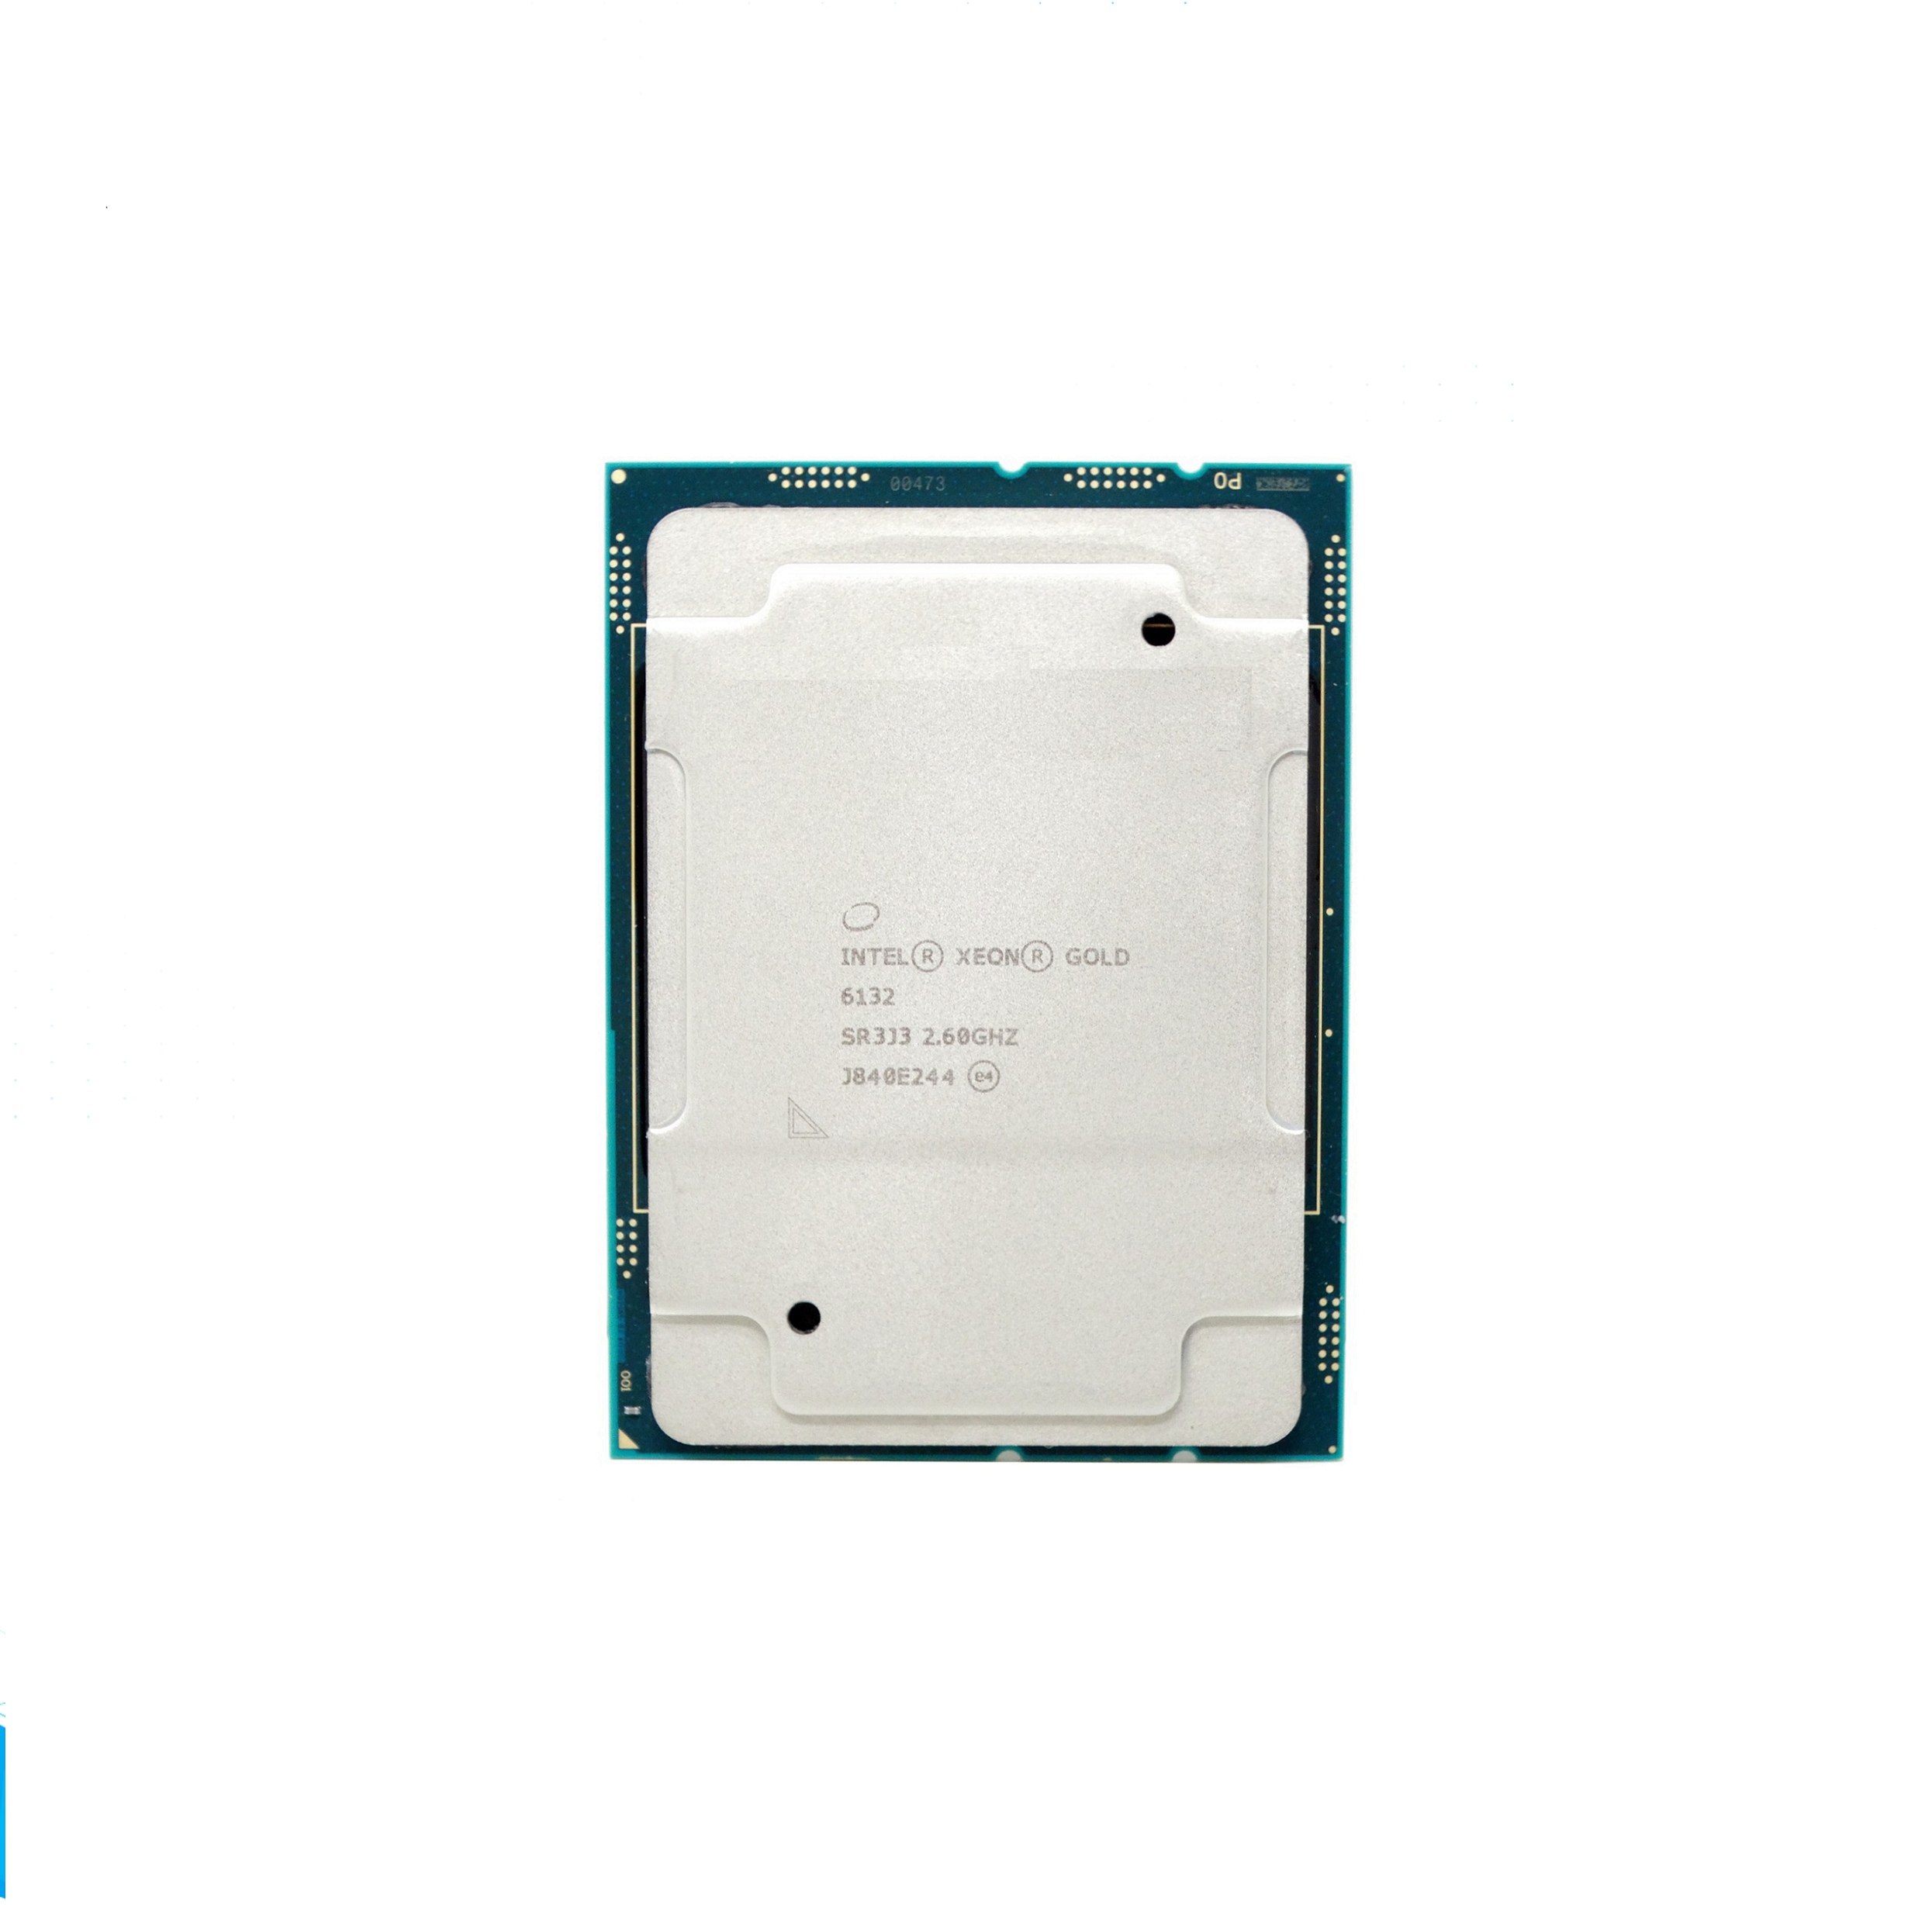 Cisco Intel Xeon Gold 6132 14-Core 2.6GHz 140W LGA3647 Processor (UCS-CPU-6132-WS)